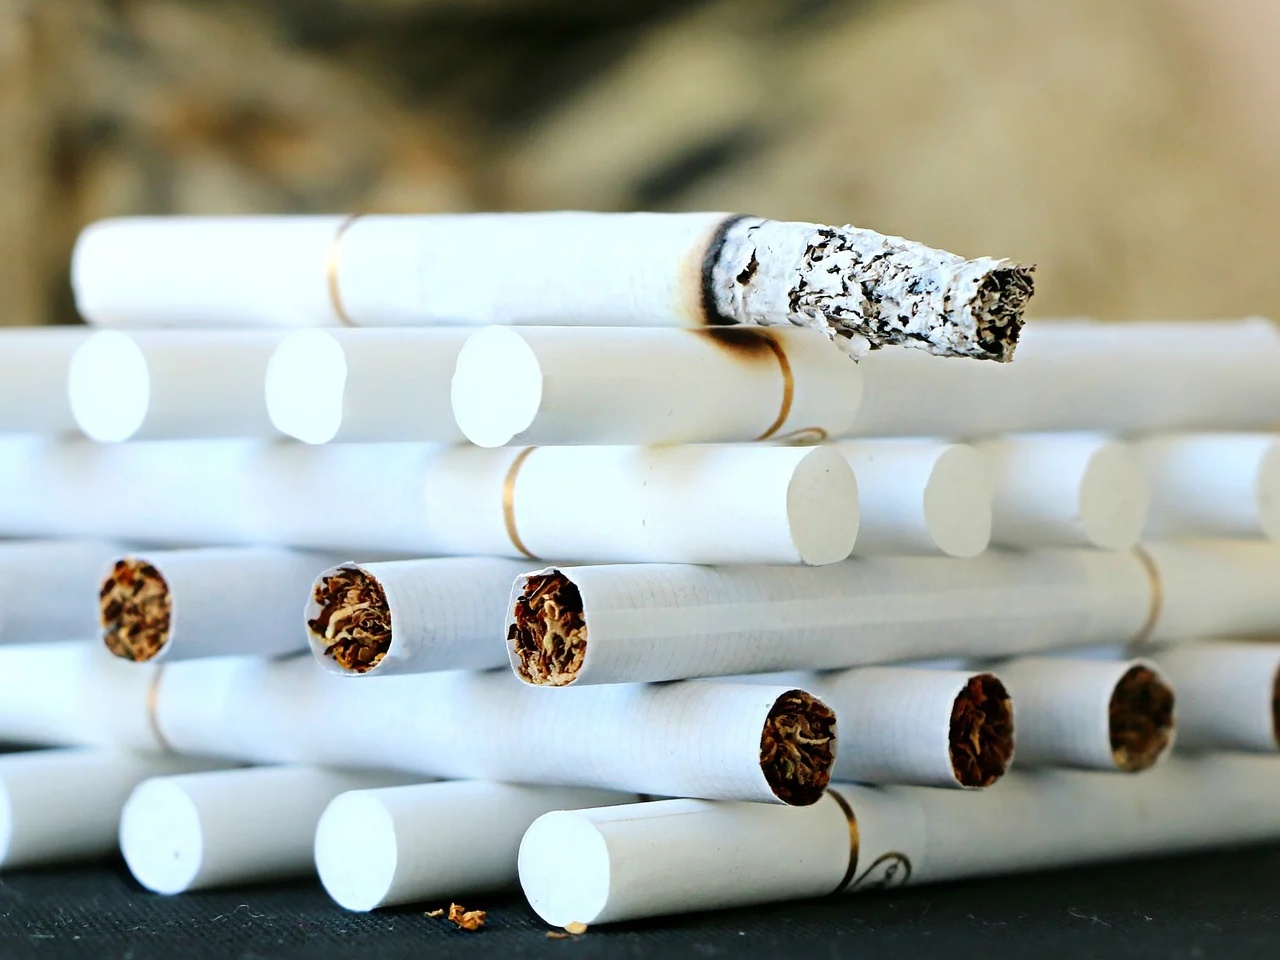 Harga Rokok Bakal Naik, Ini Tanggapan Para Perokok Aktif